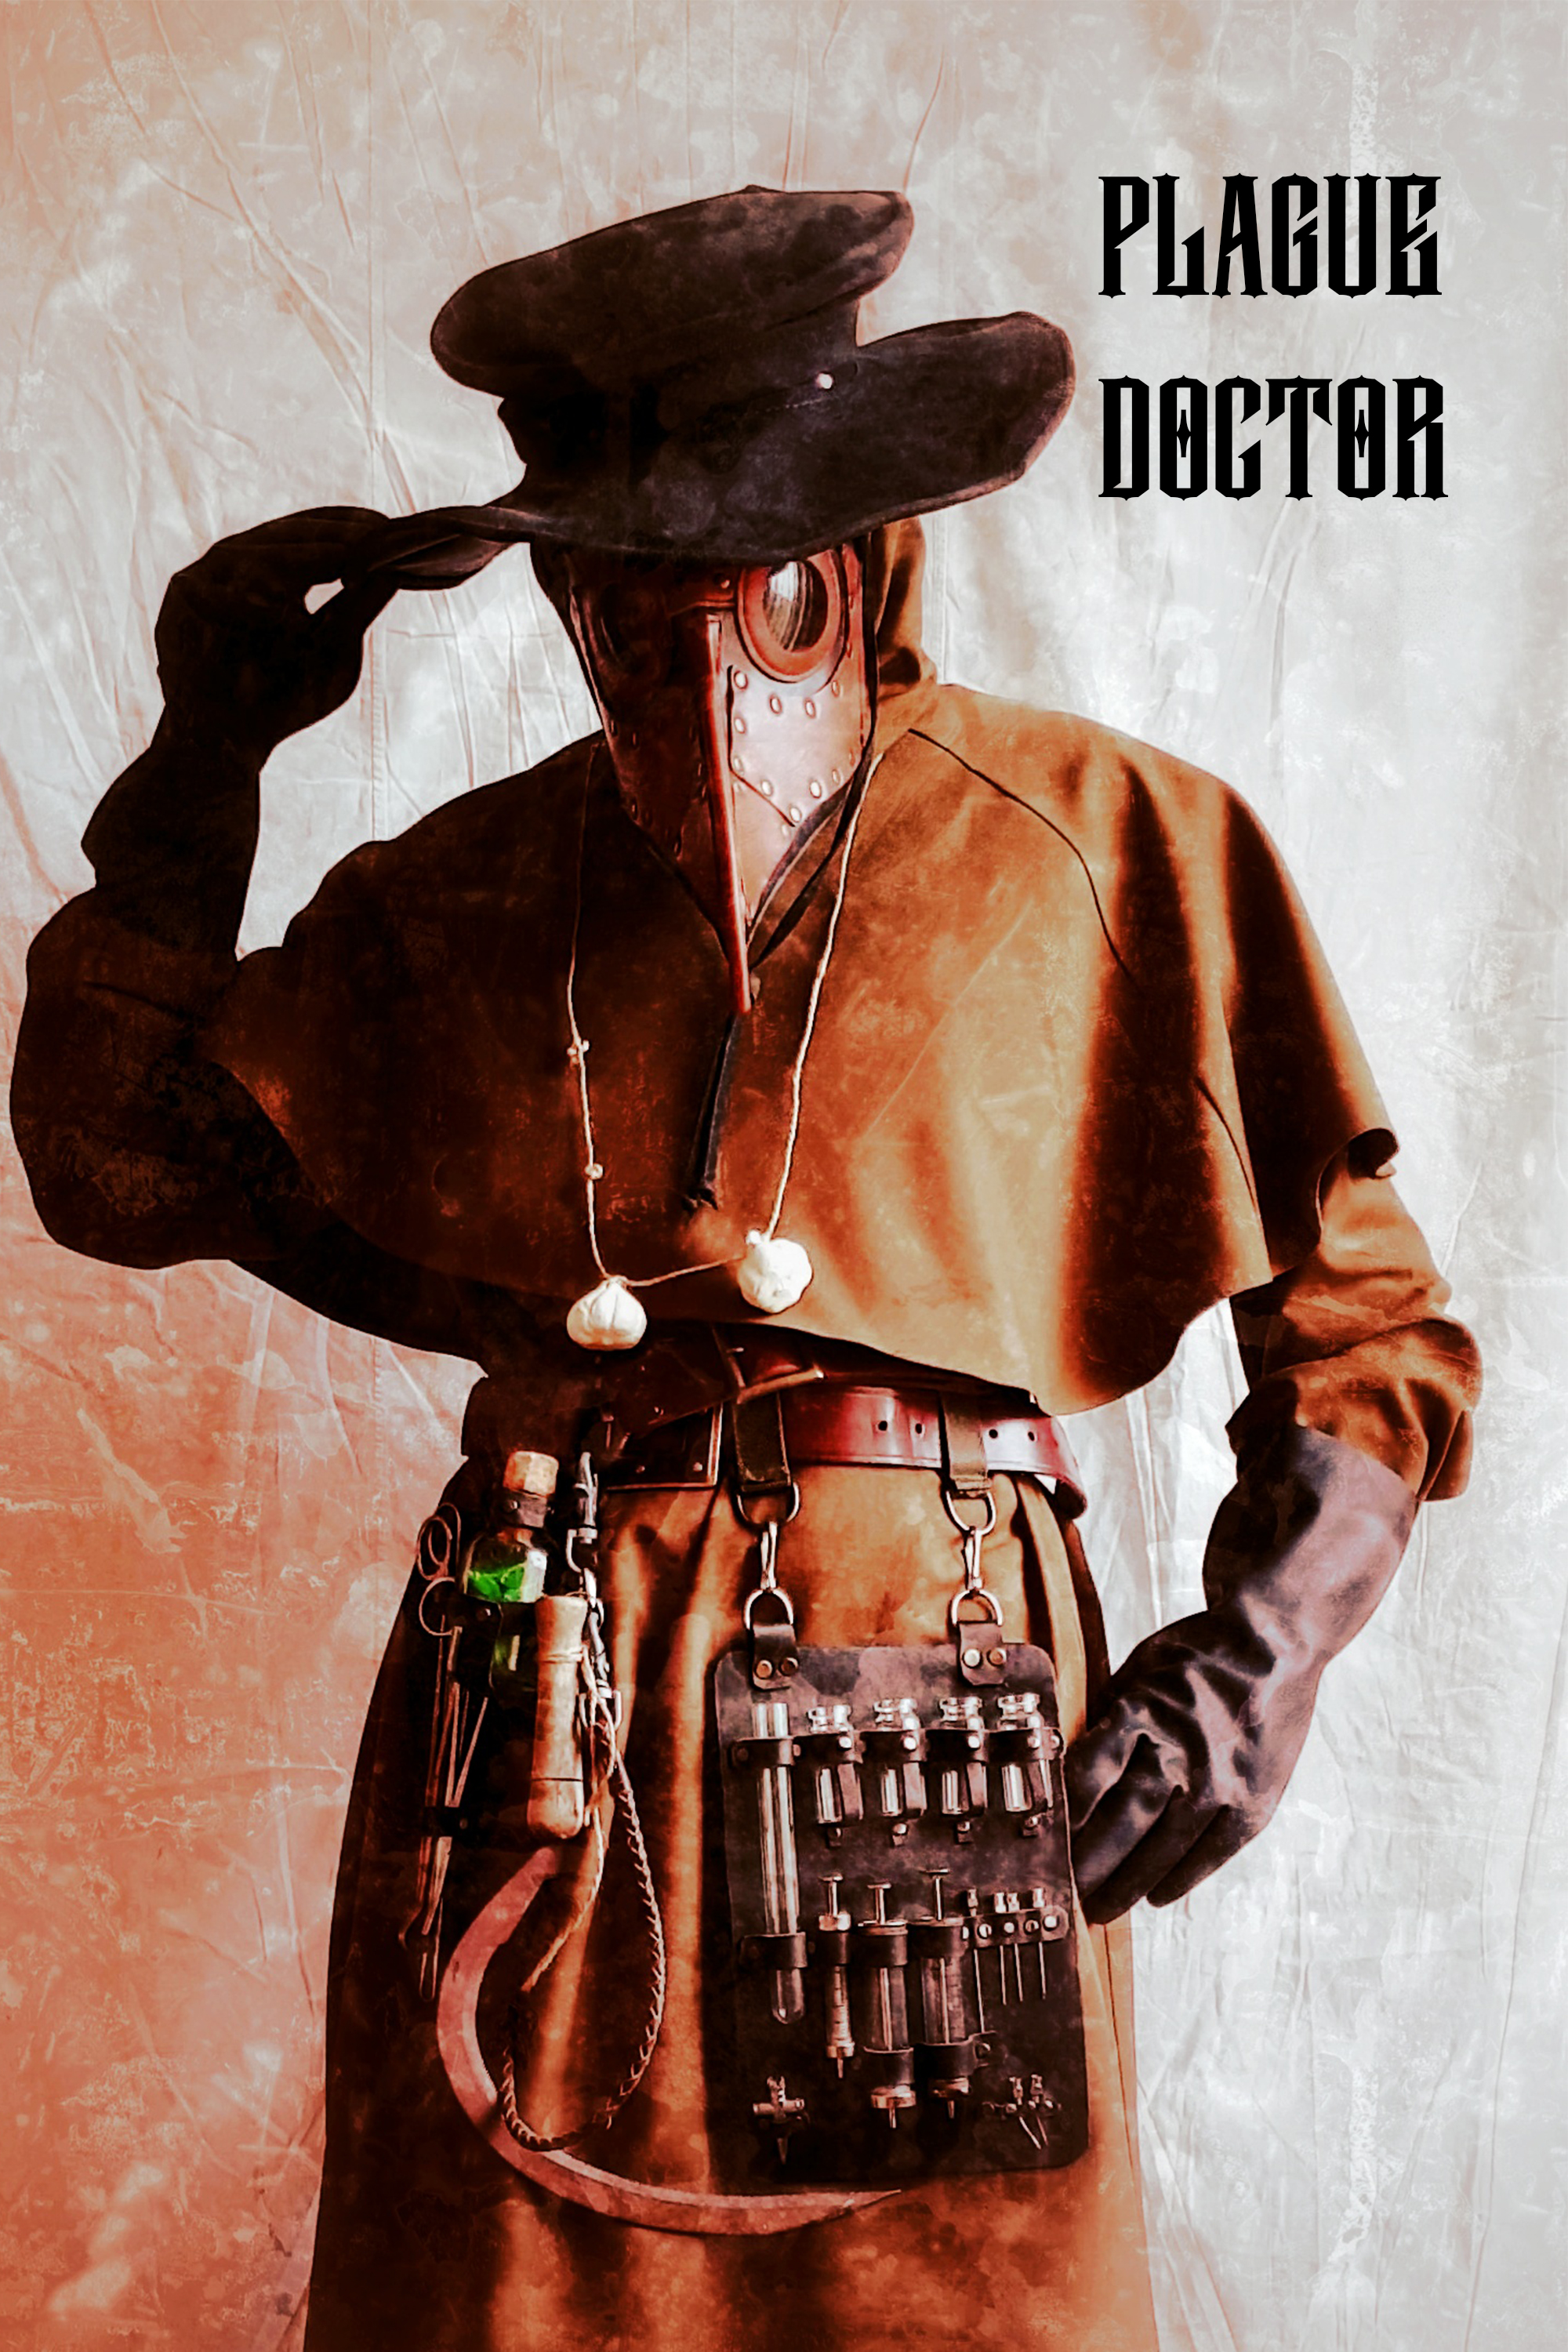 Plague doctor